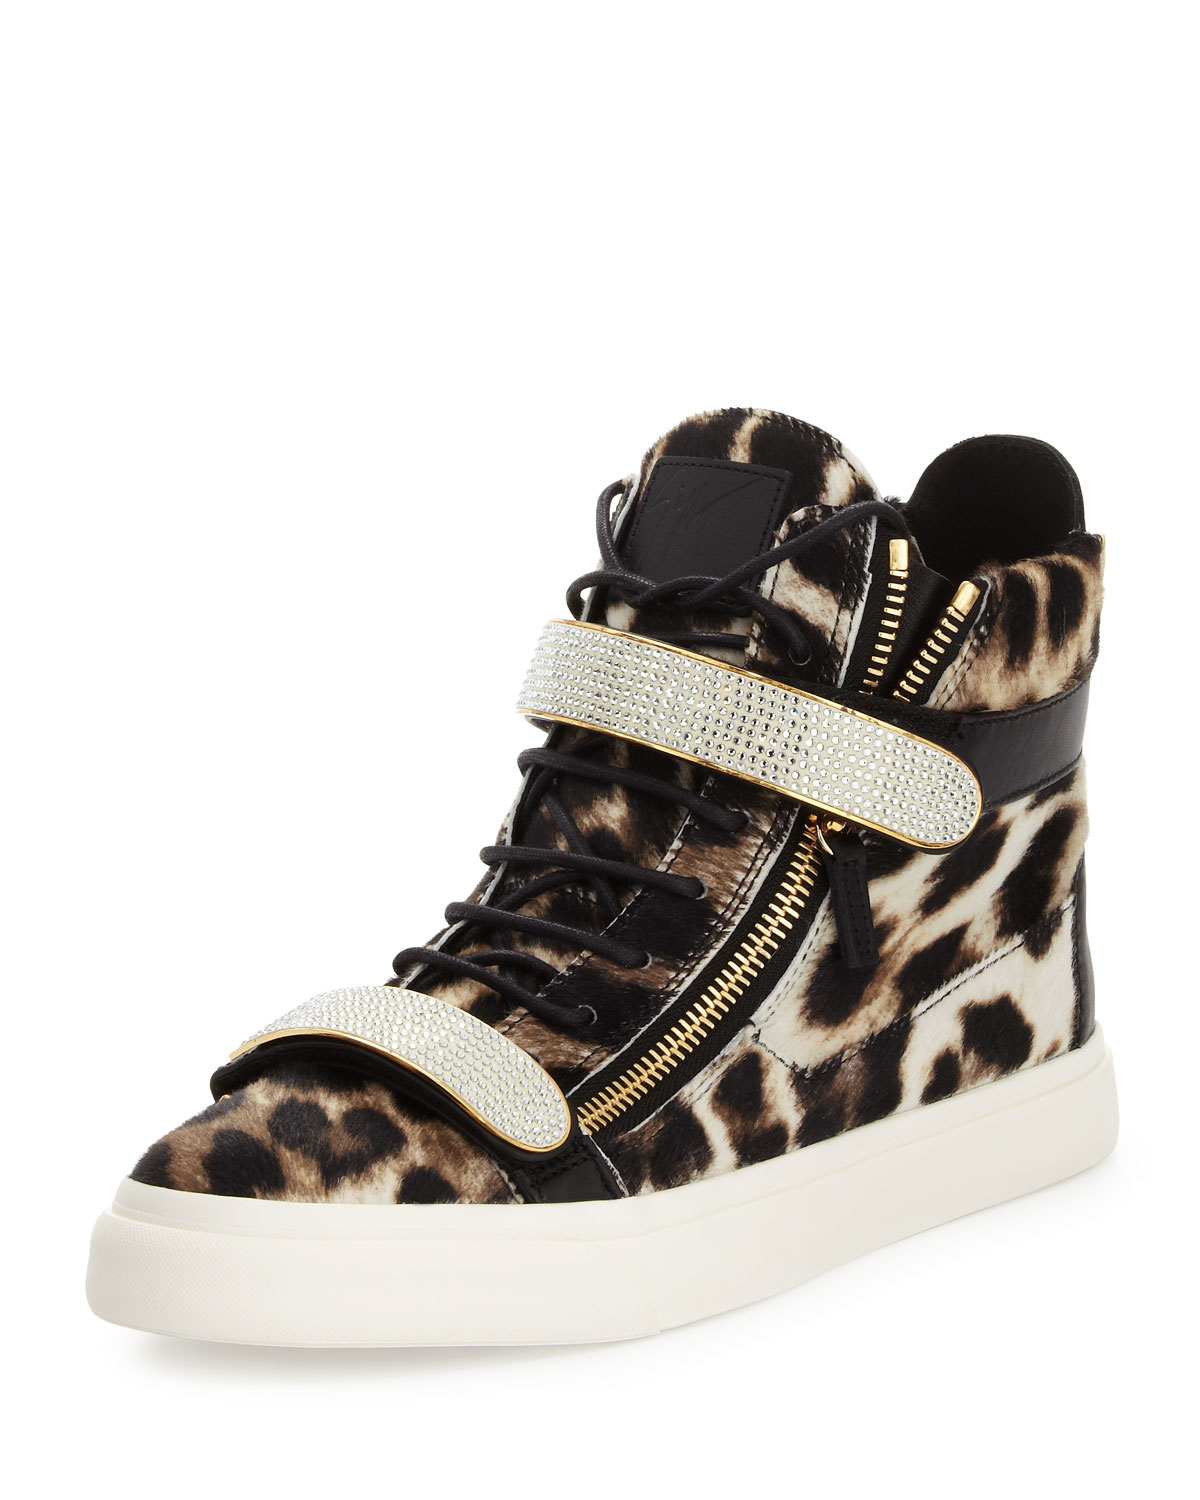 Lyst - Giuseppe zanotti Mens Leopard-Print Calf Hair High-Top Sneaker ...